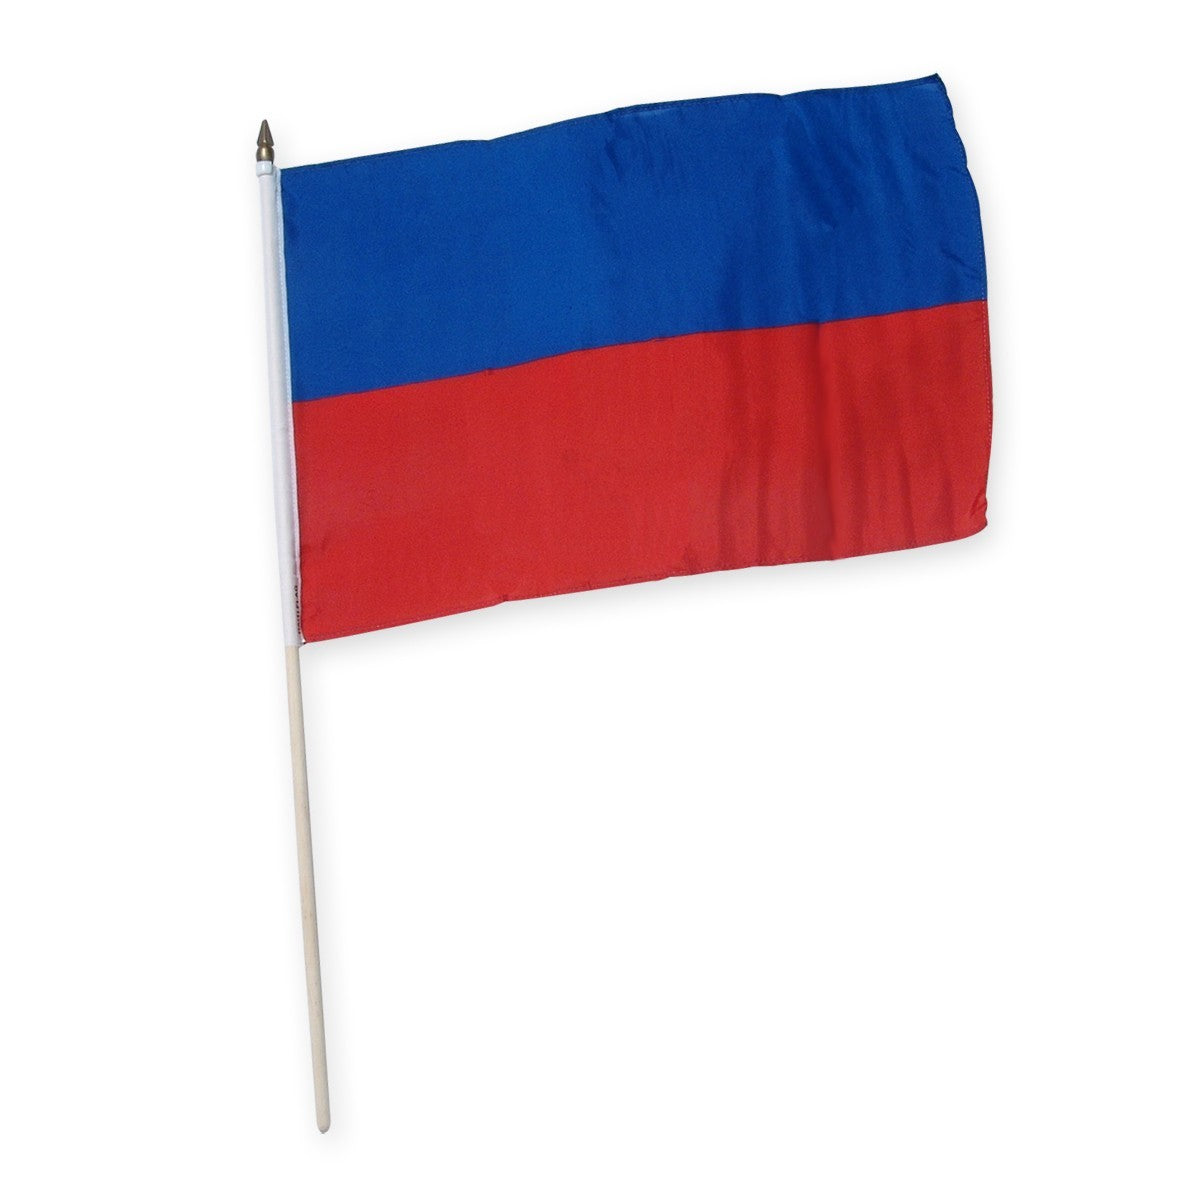 Haiti flags for sale 1-800 flags